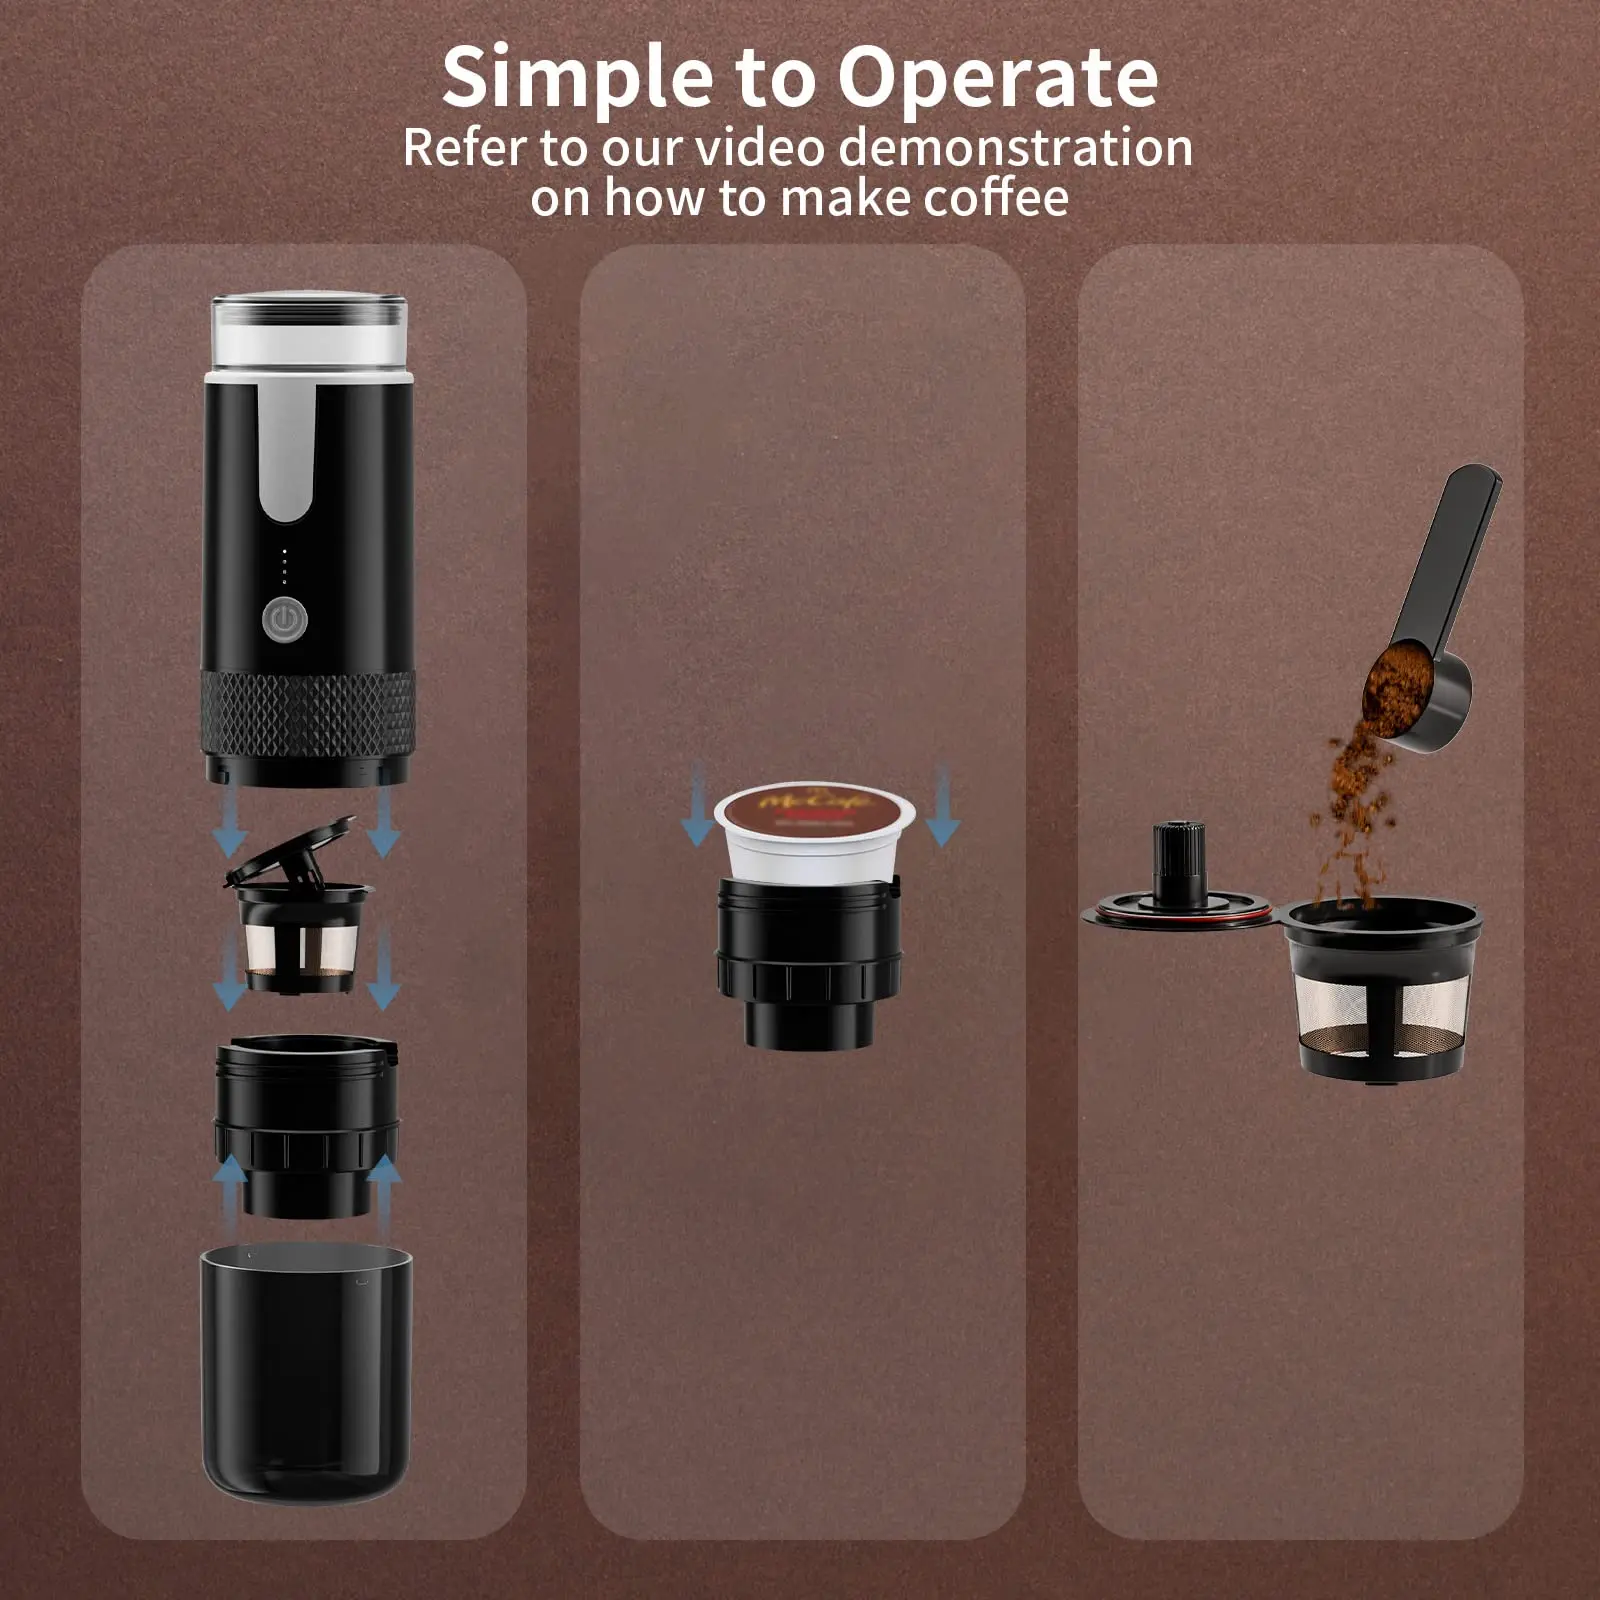 https://ae01.alicdn.com/kf/Sd0ca8f5077f94fd98bd7996e951e19e3R/Portable-Electronic-Coffee-Maker-Rechargeable-Espresso-Machine-Mini-Car-Coffee-Make-Using-Ground-Coffee-Espresso-Pods.jpg